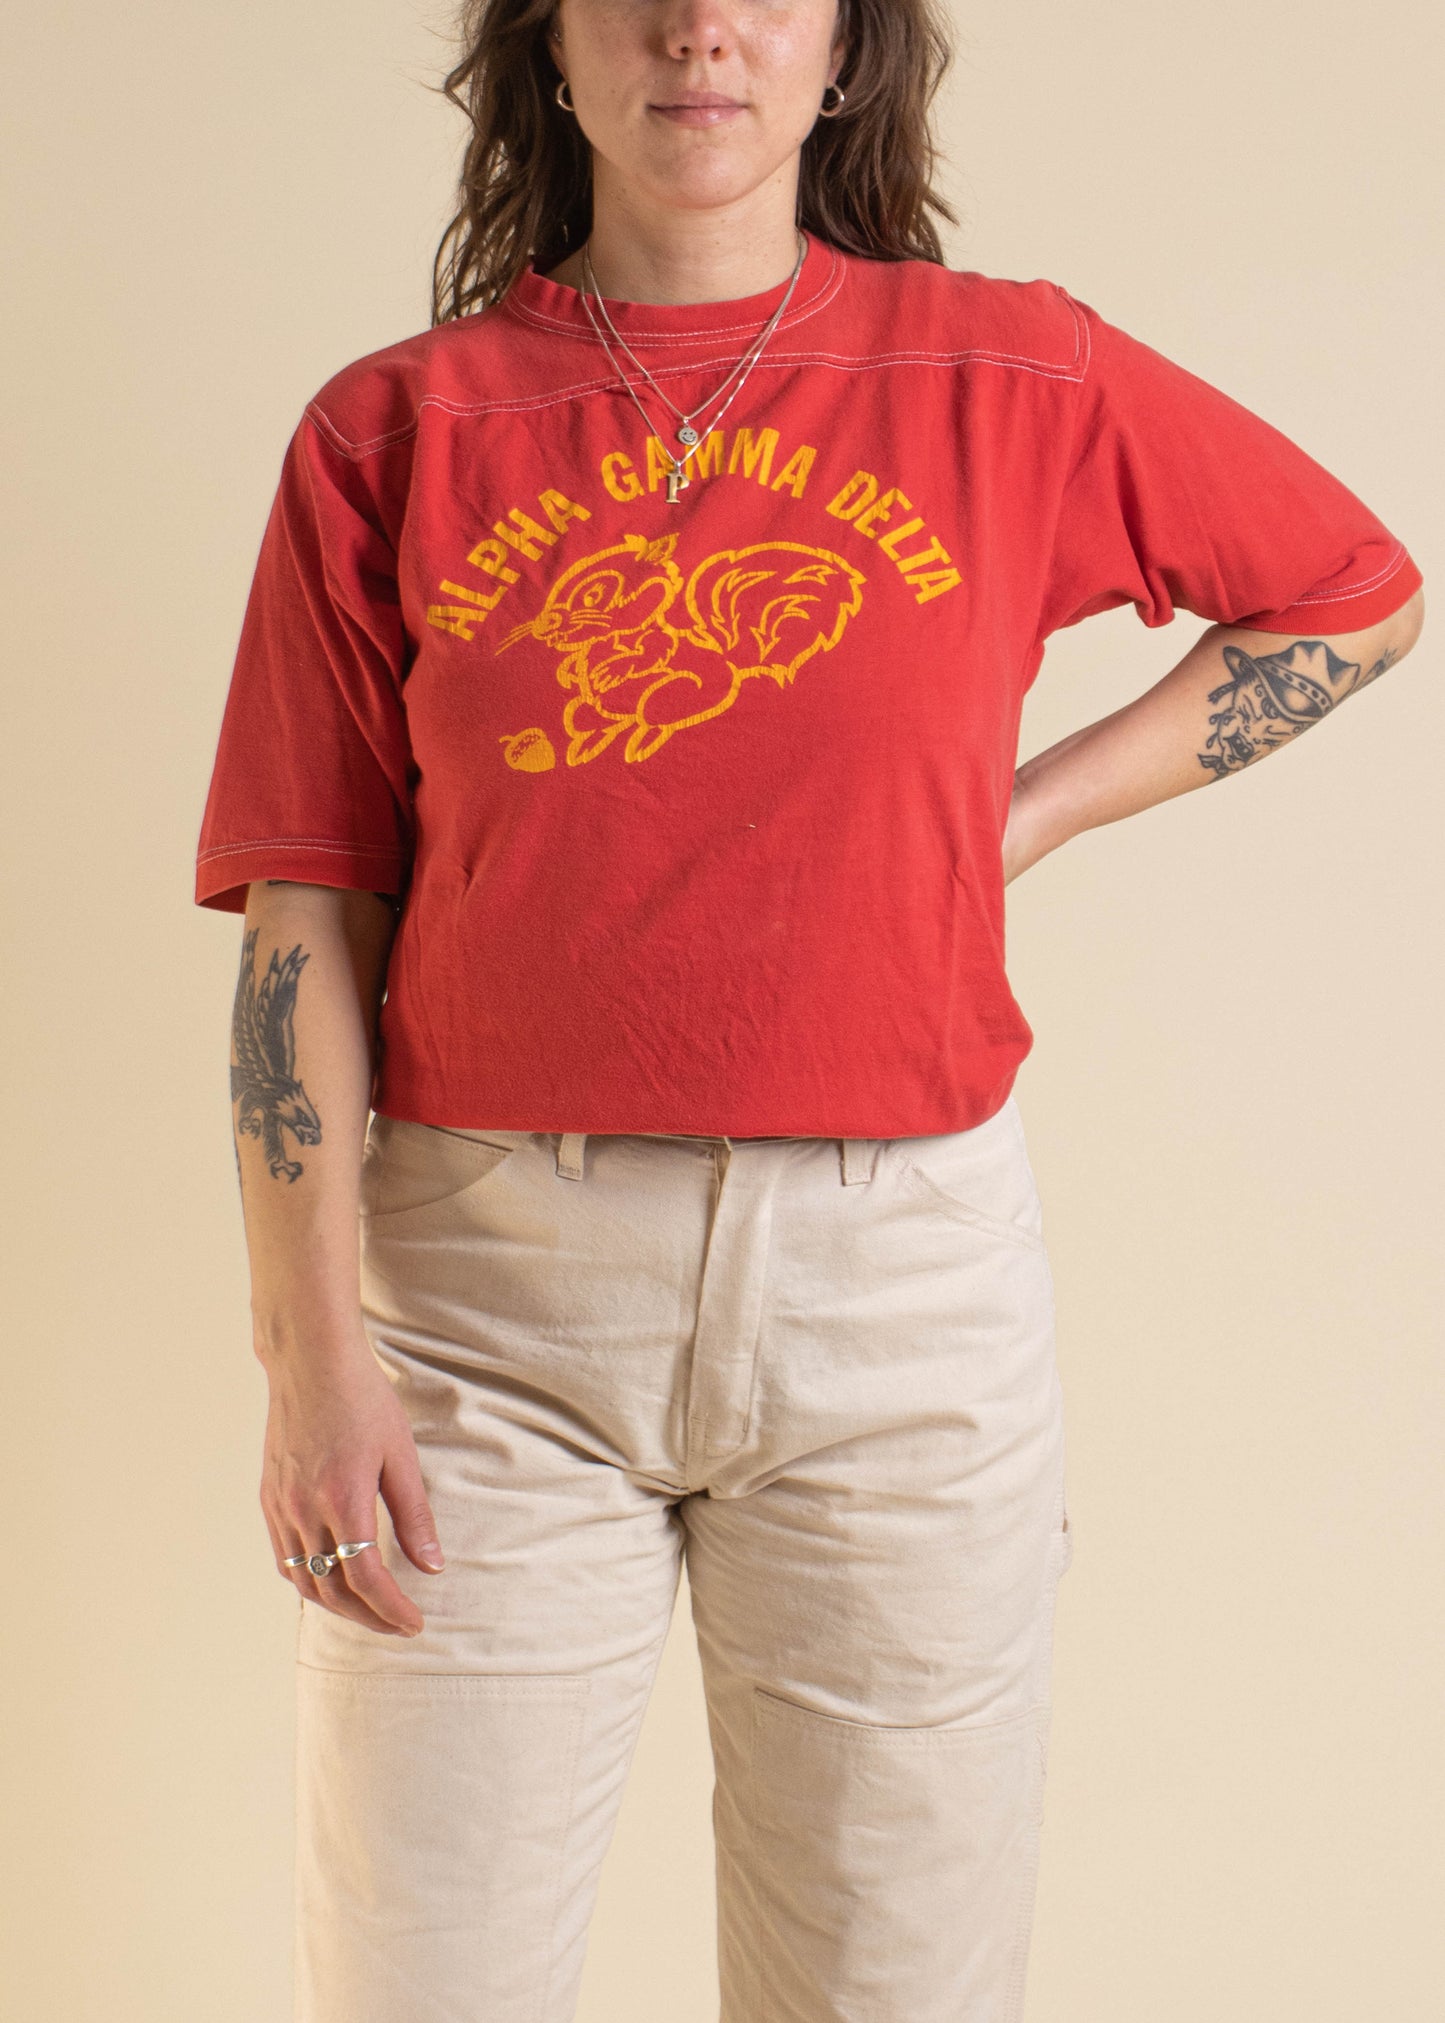 1980s FSSC Alpha Gamma Delta Souvenir T-Shirt Size S/M